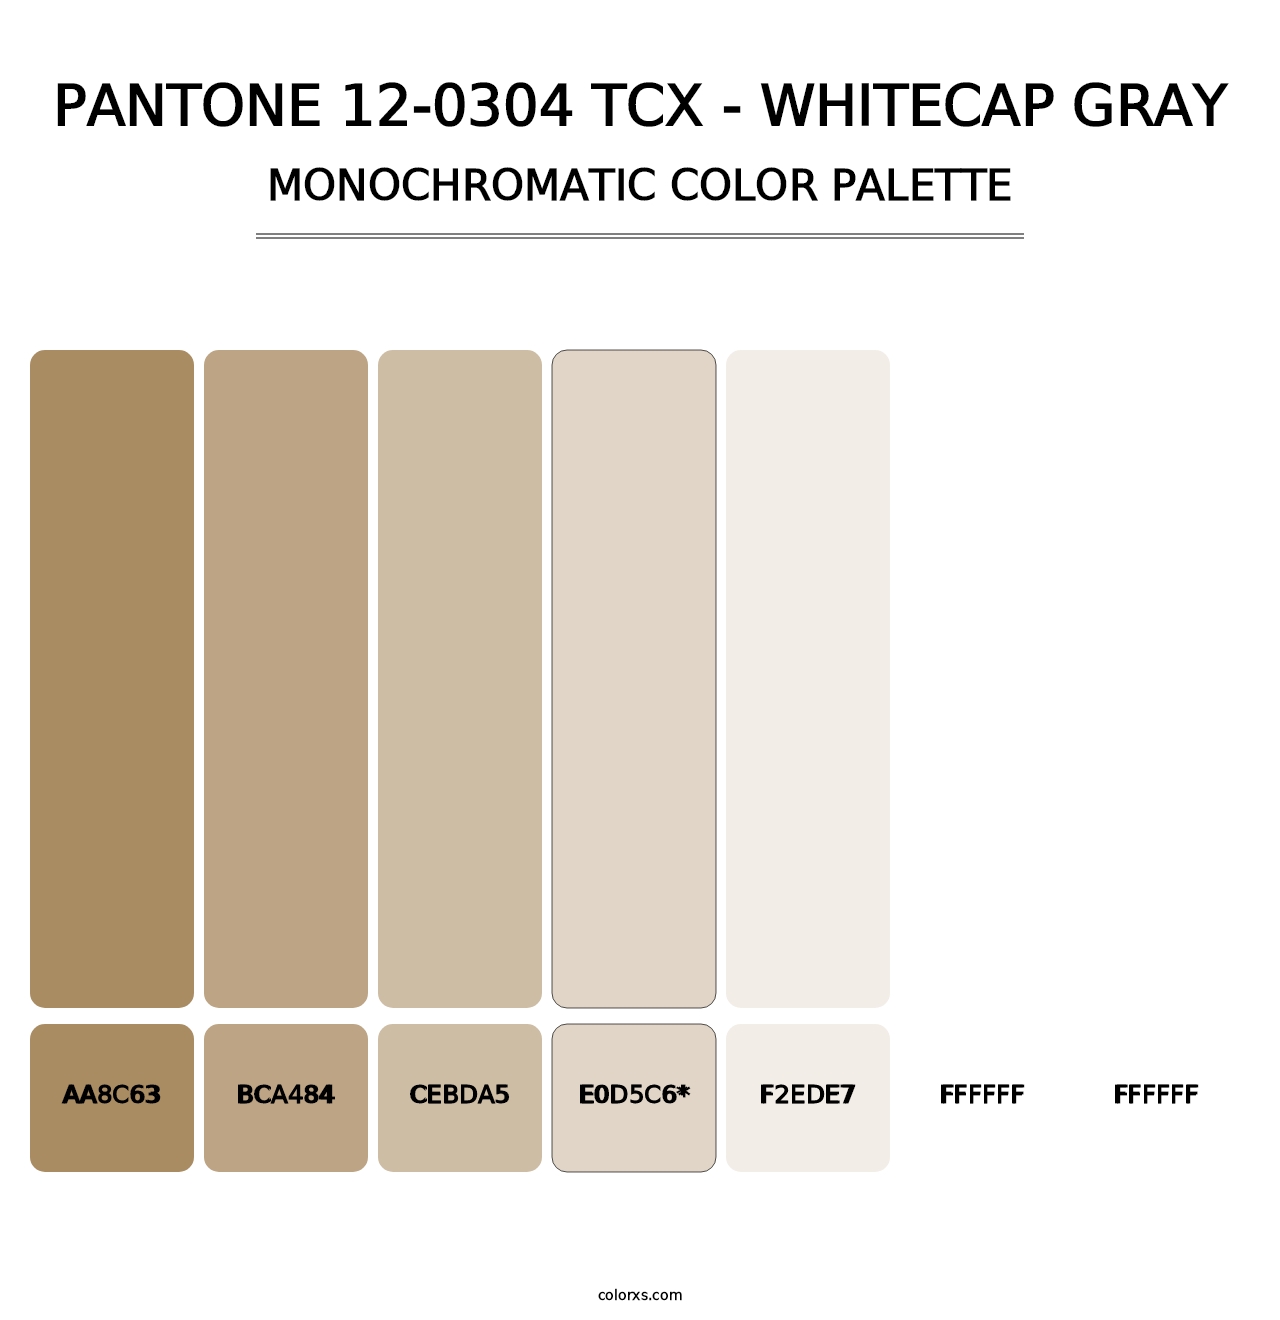 PANTONE 12-0304 TCX - Whitecap Gray - Monochromatic Color Palette